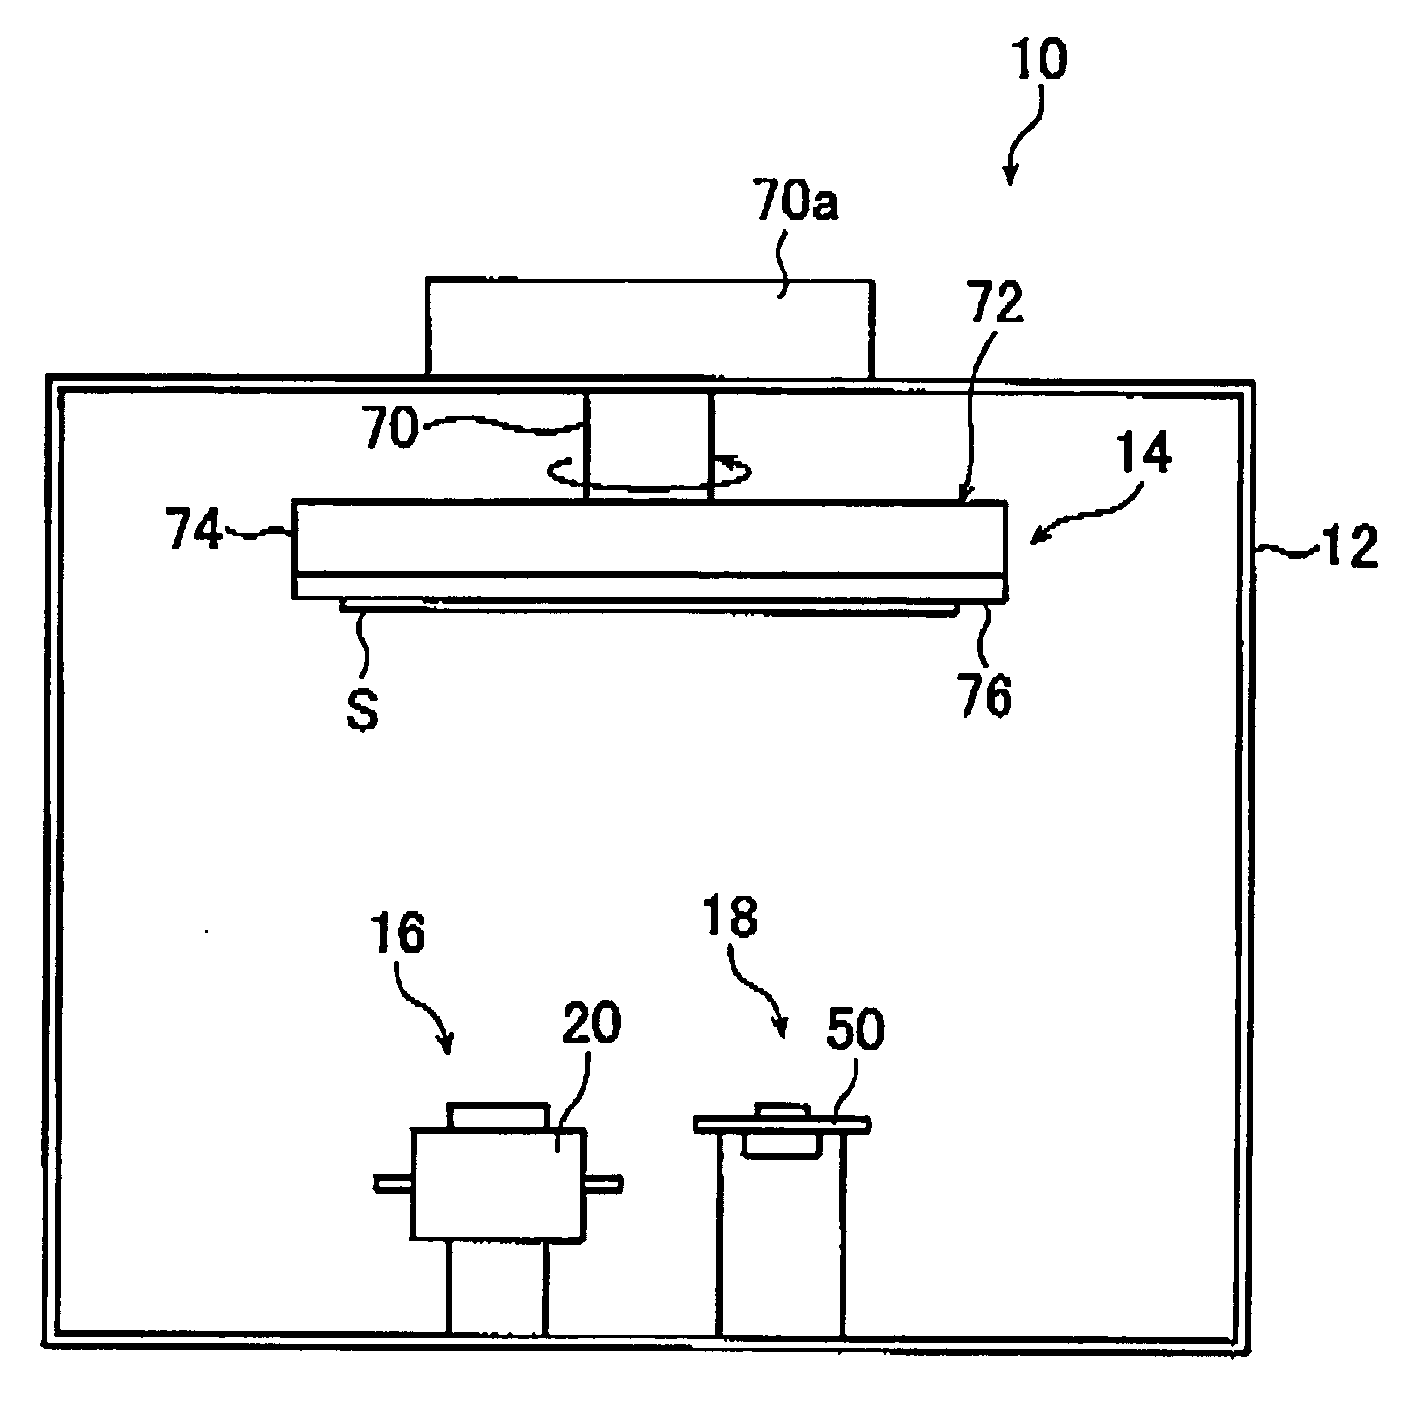 Vacuum evaporation crucible and phosphor sheet manufacturing apparatus using the same